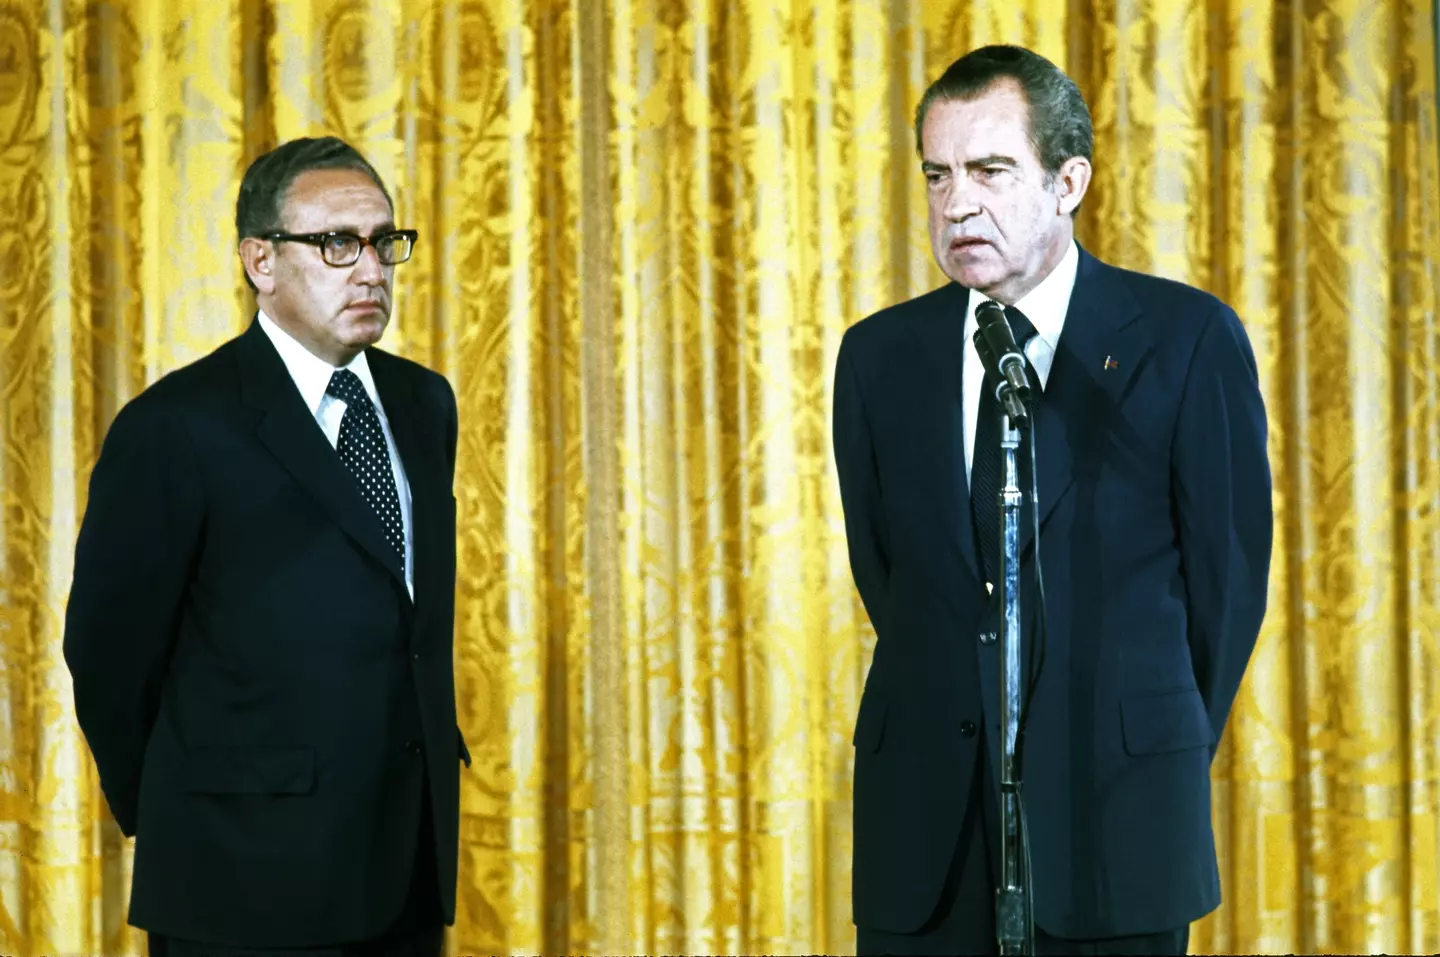 Kissinger was Secretary of State during Nixon's presidency.